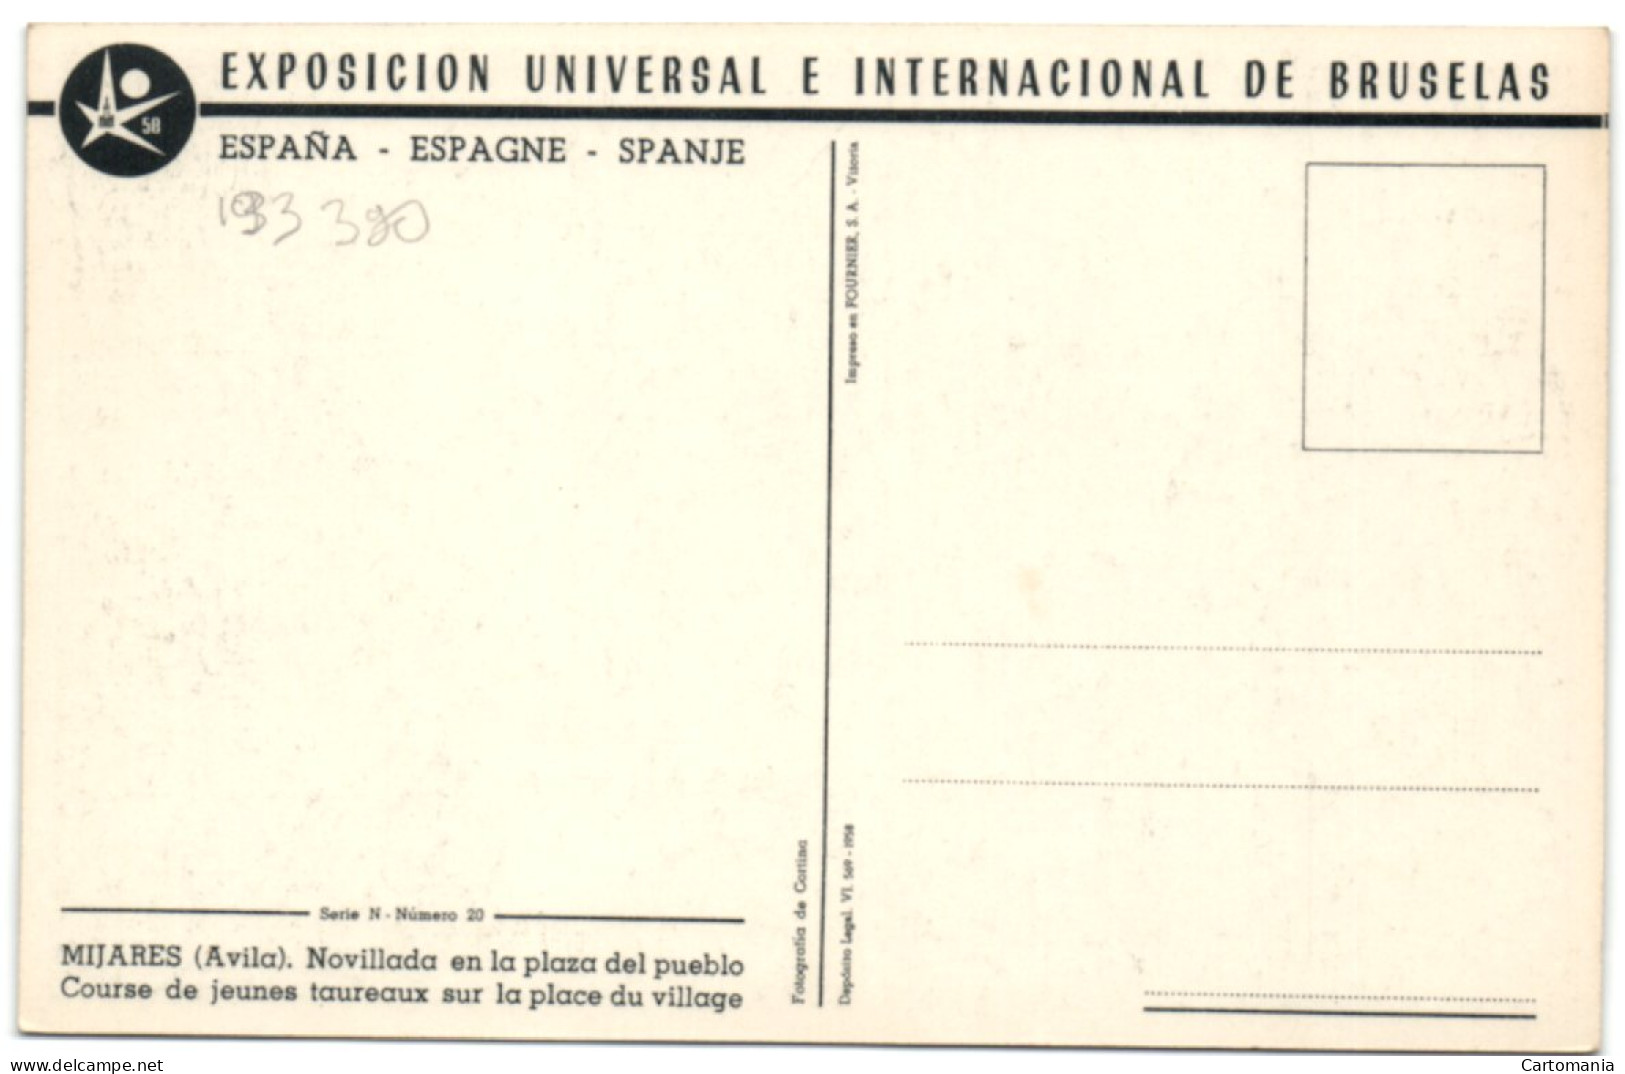 Exposicion Universal E Internacional De Bruselas 1958 - Mijares (Avila) - Novillada En La Plazza Del Pueblo - Ávila